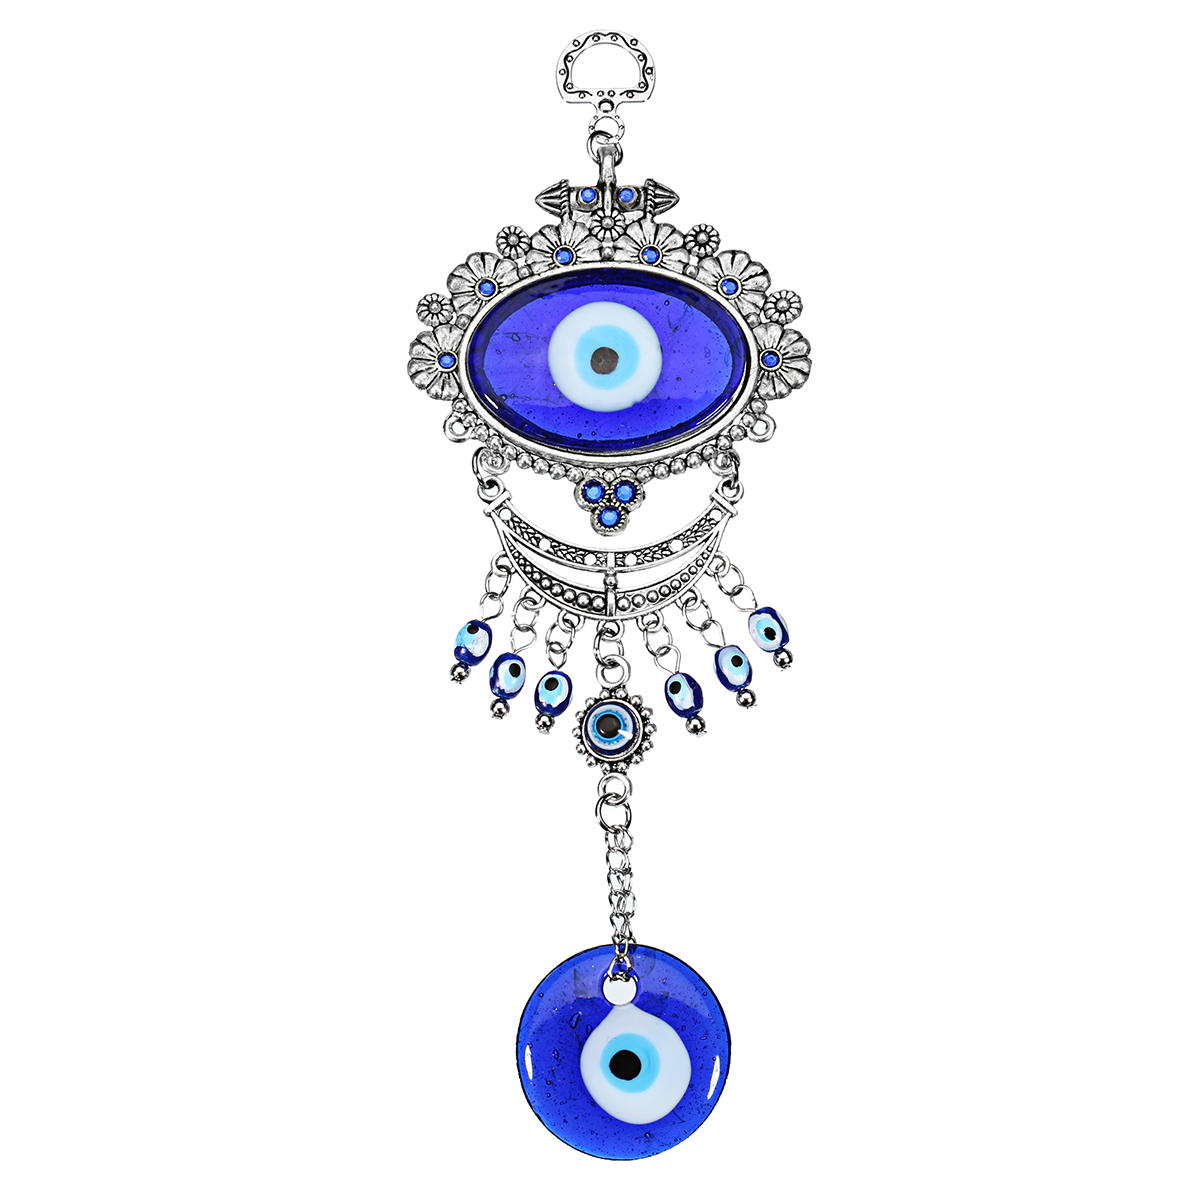 Turkse ovale blauwe boze oog amulet muur opknoping auto Decor zegen beschermer decoraties